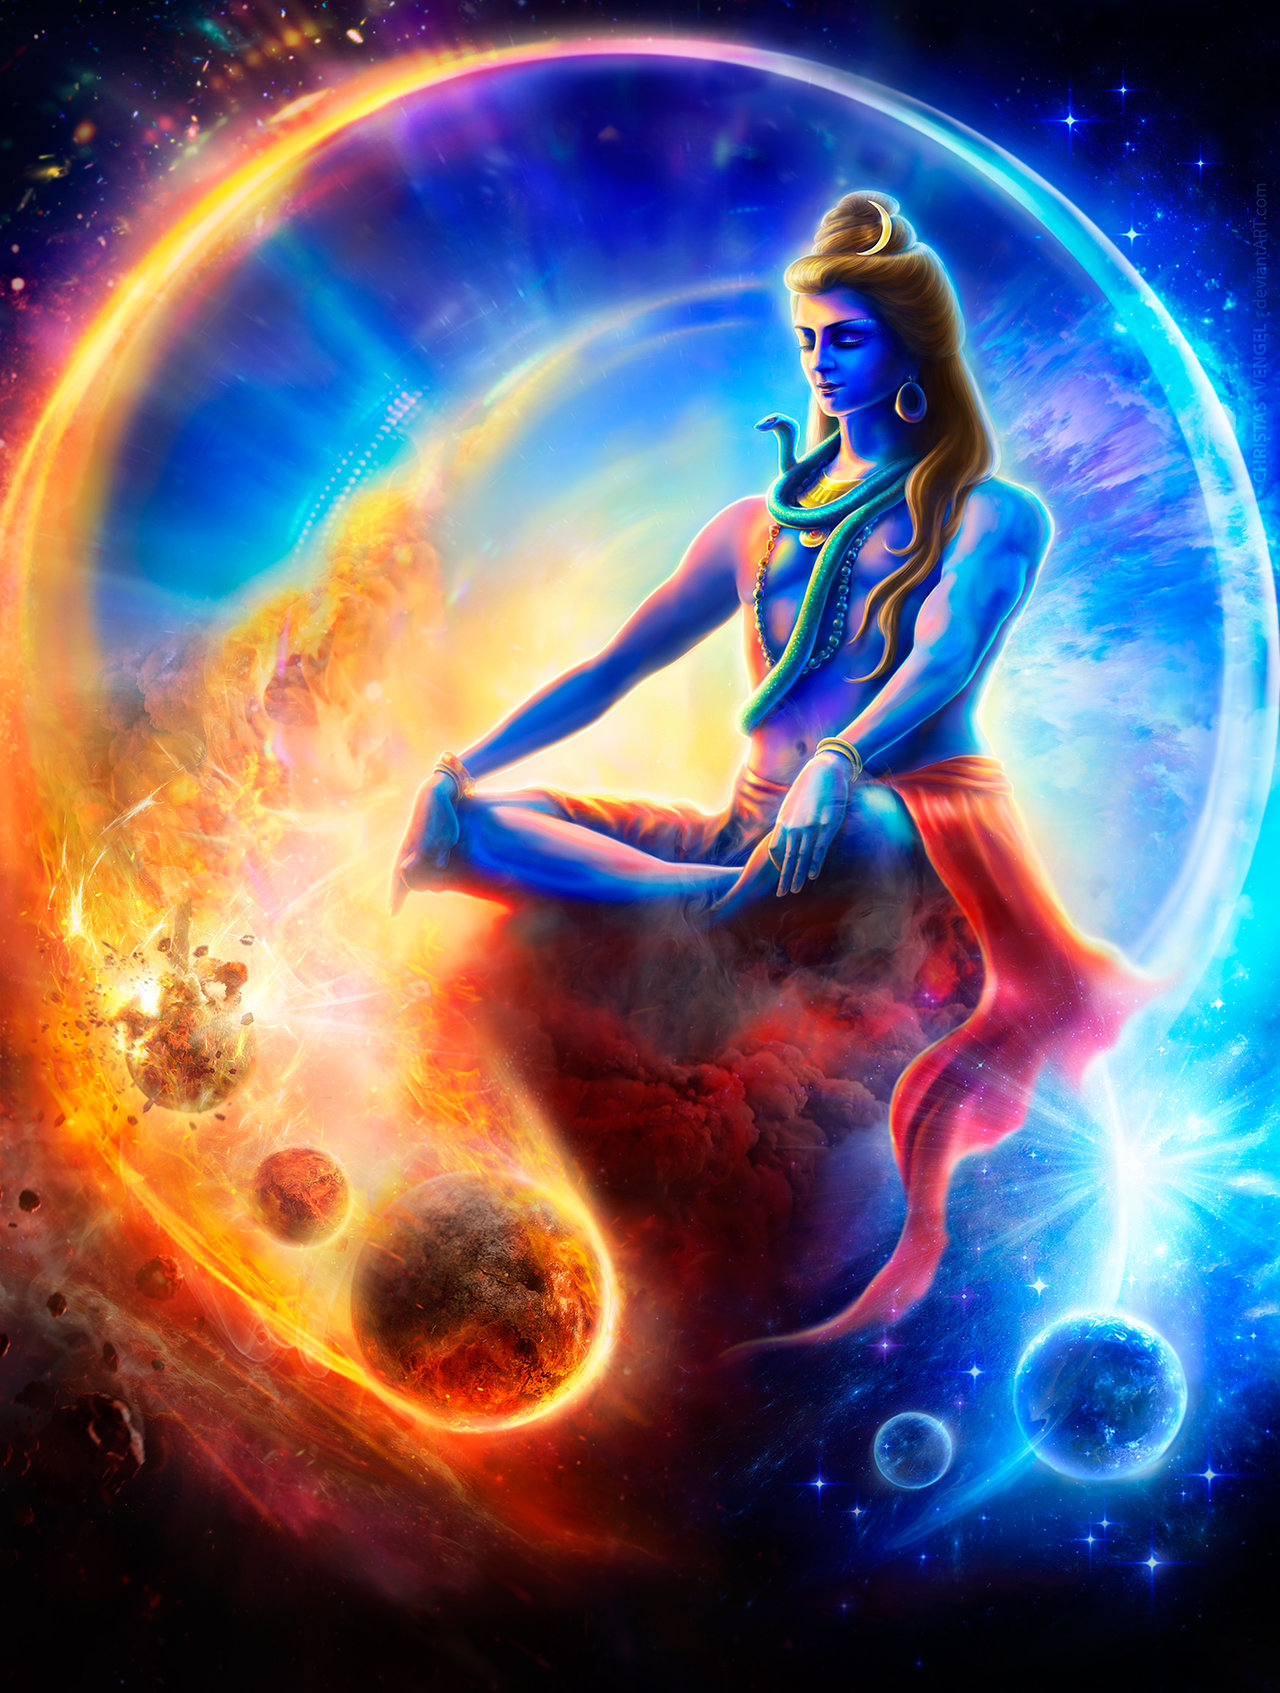 Cosmic Shiva. The Seduction Of the Divine